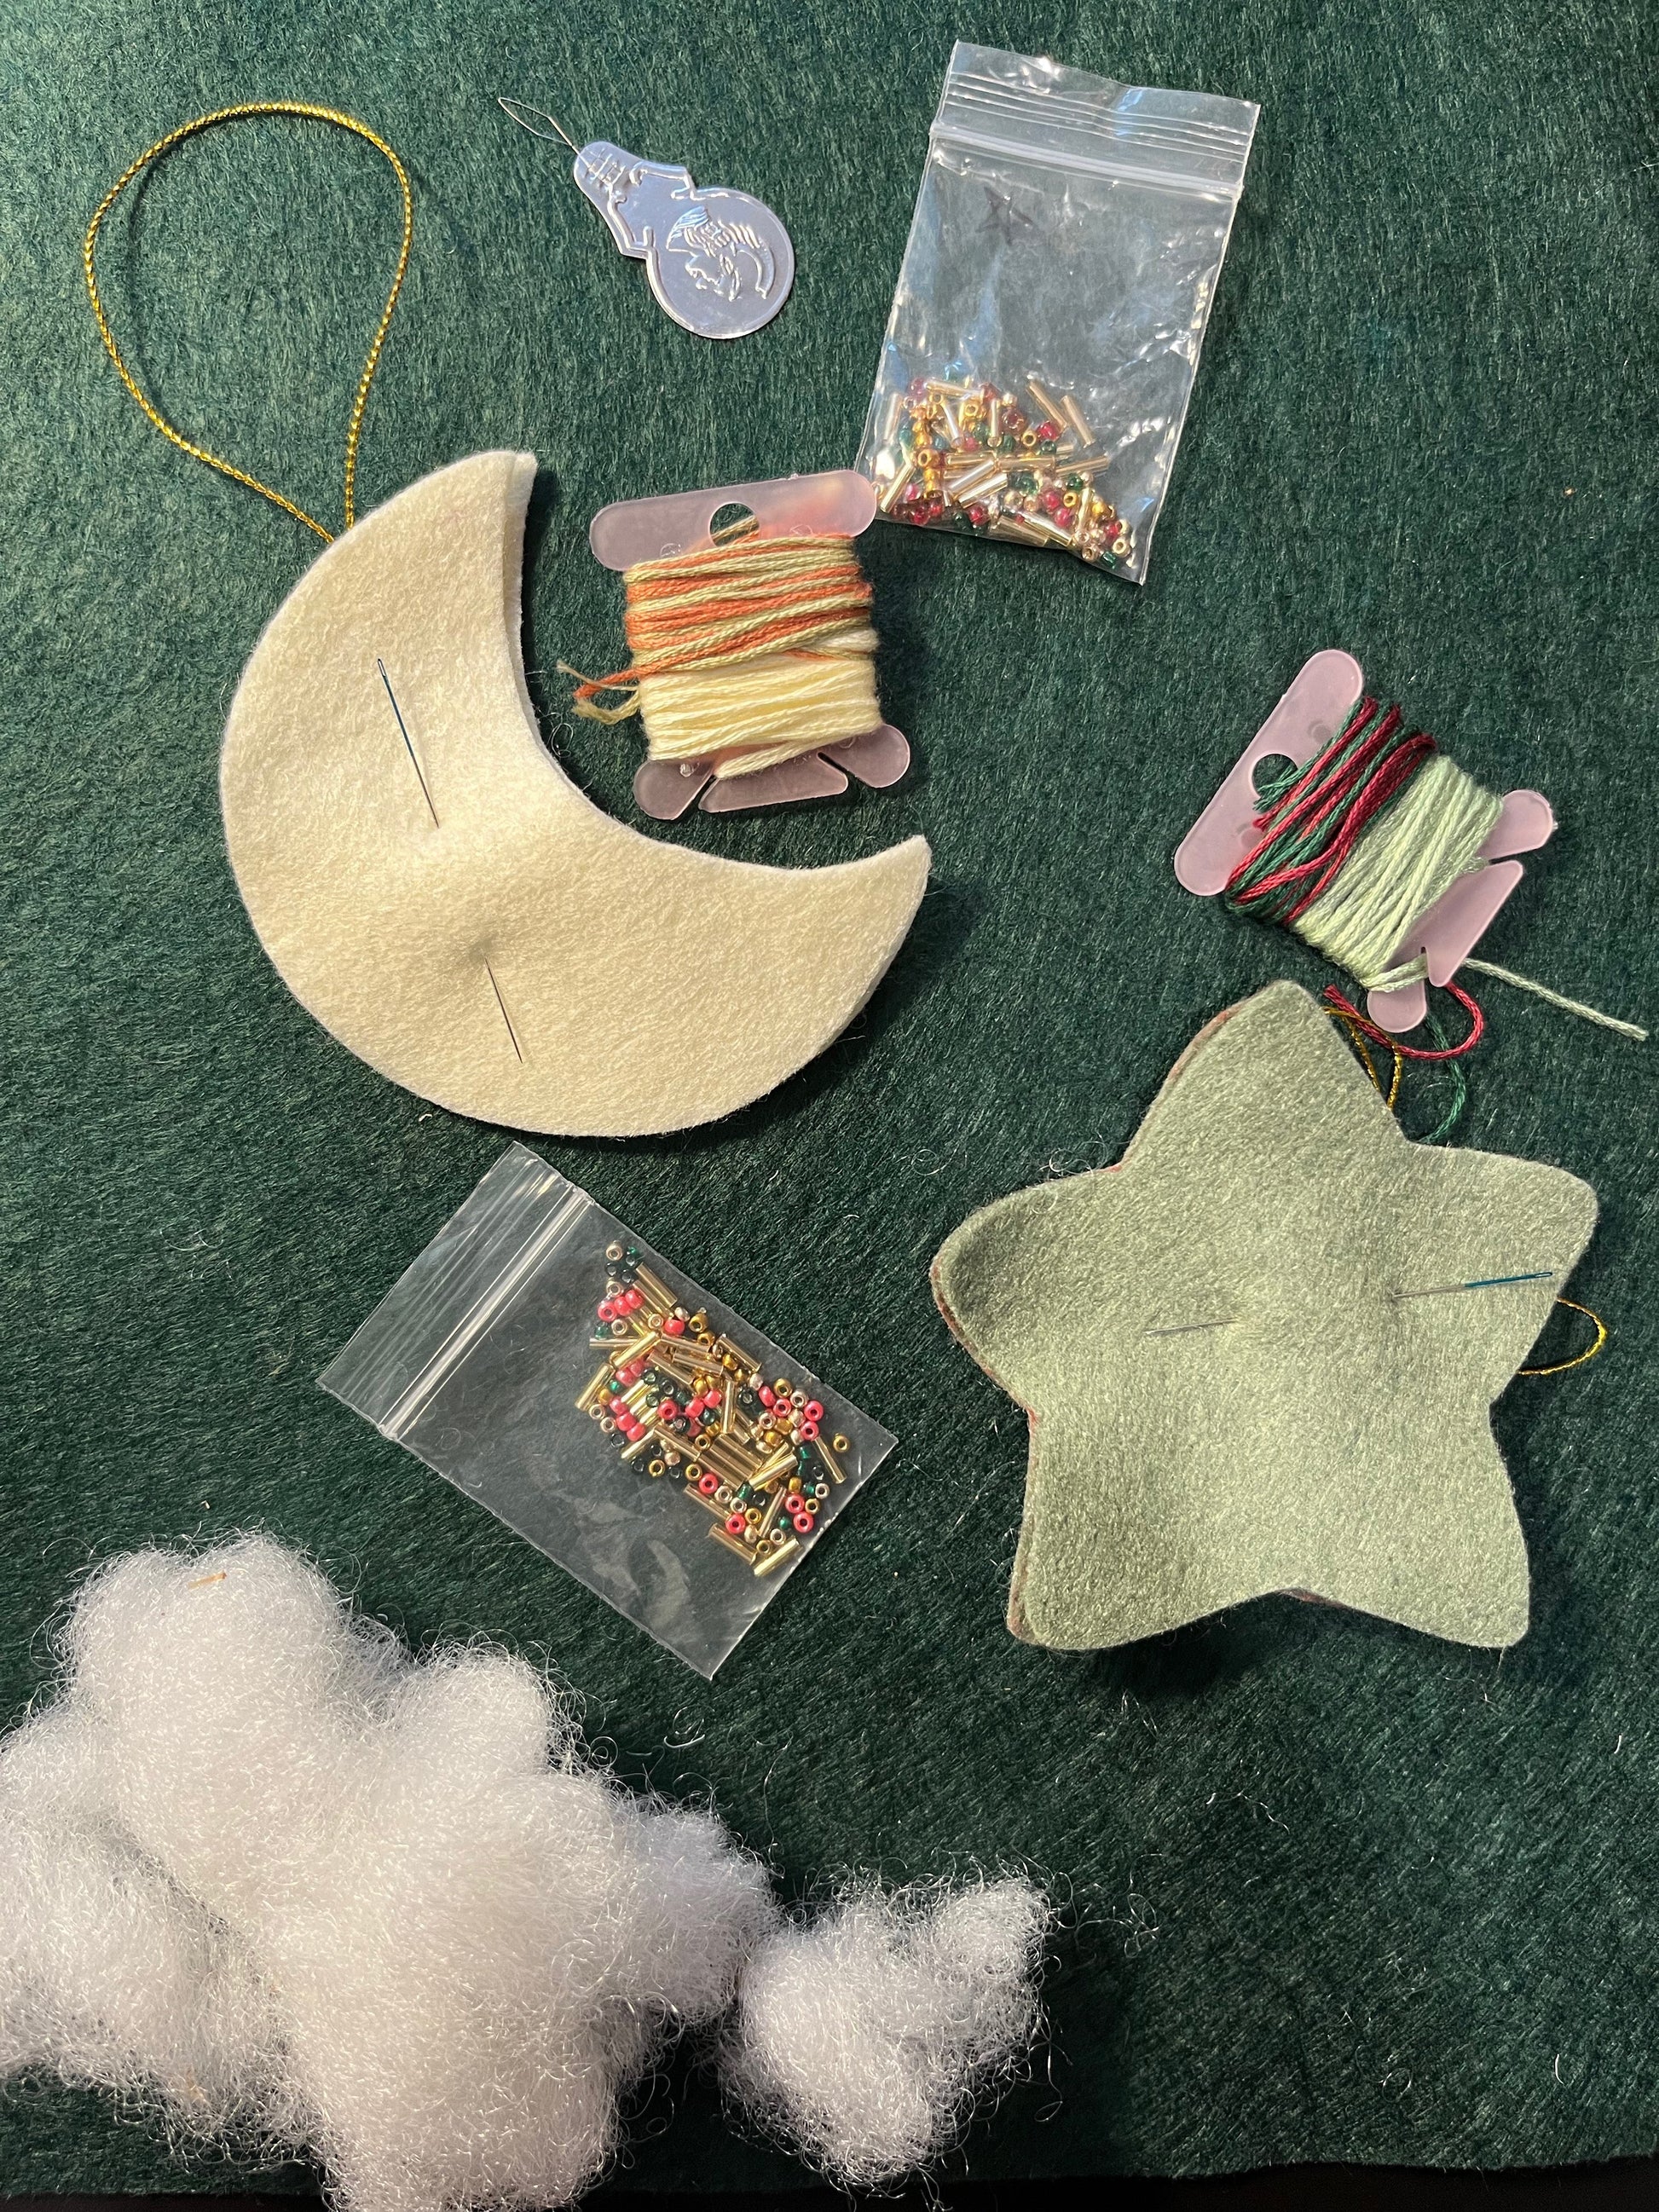 DIY Embroidered Ornament Kit! diy kit from GemCadet